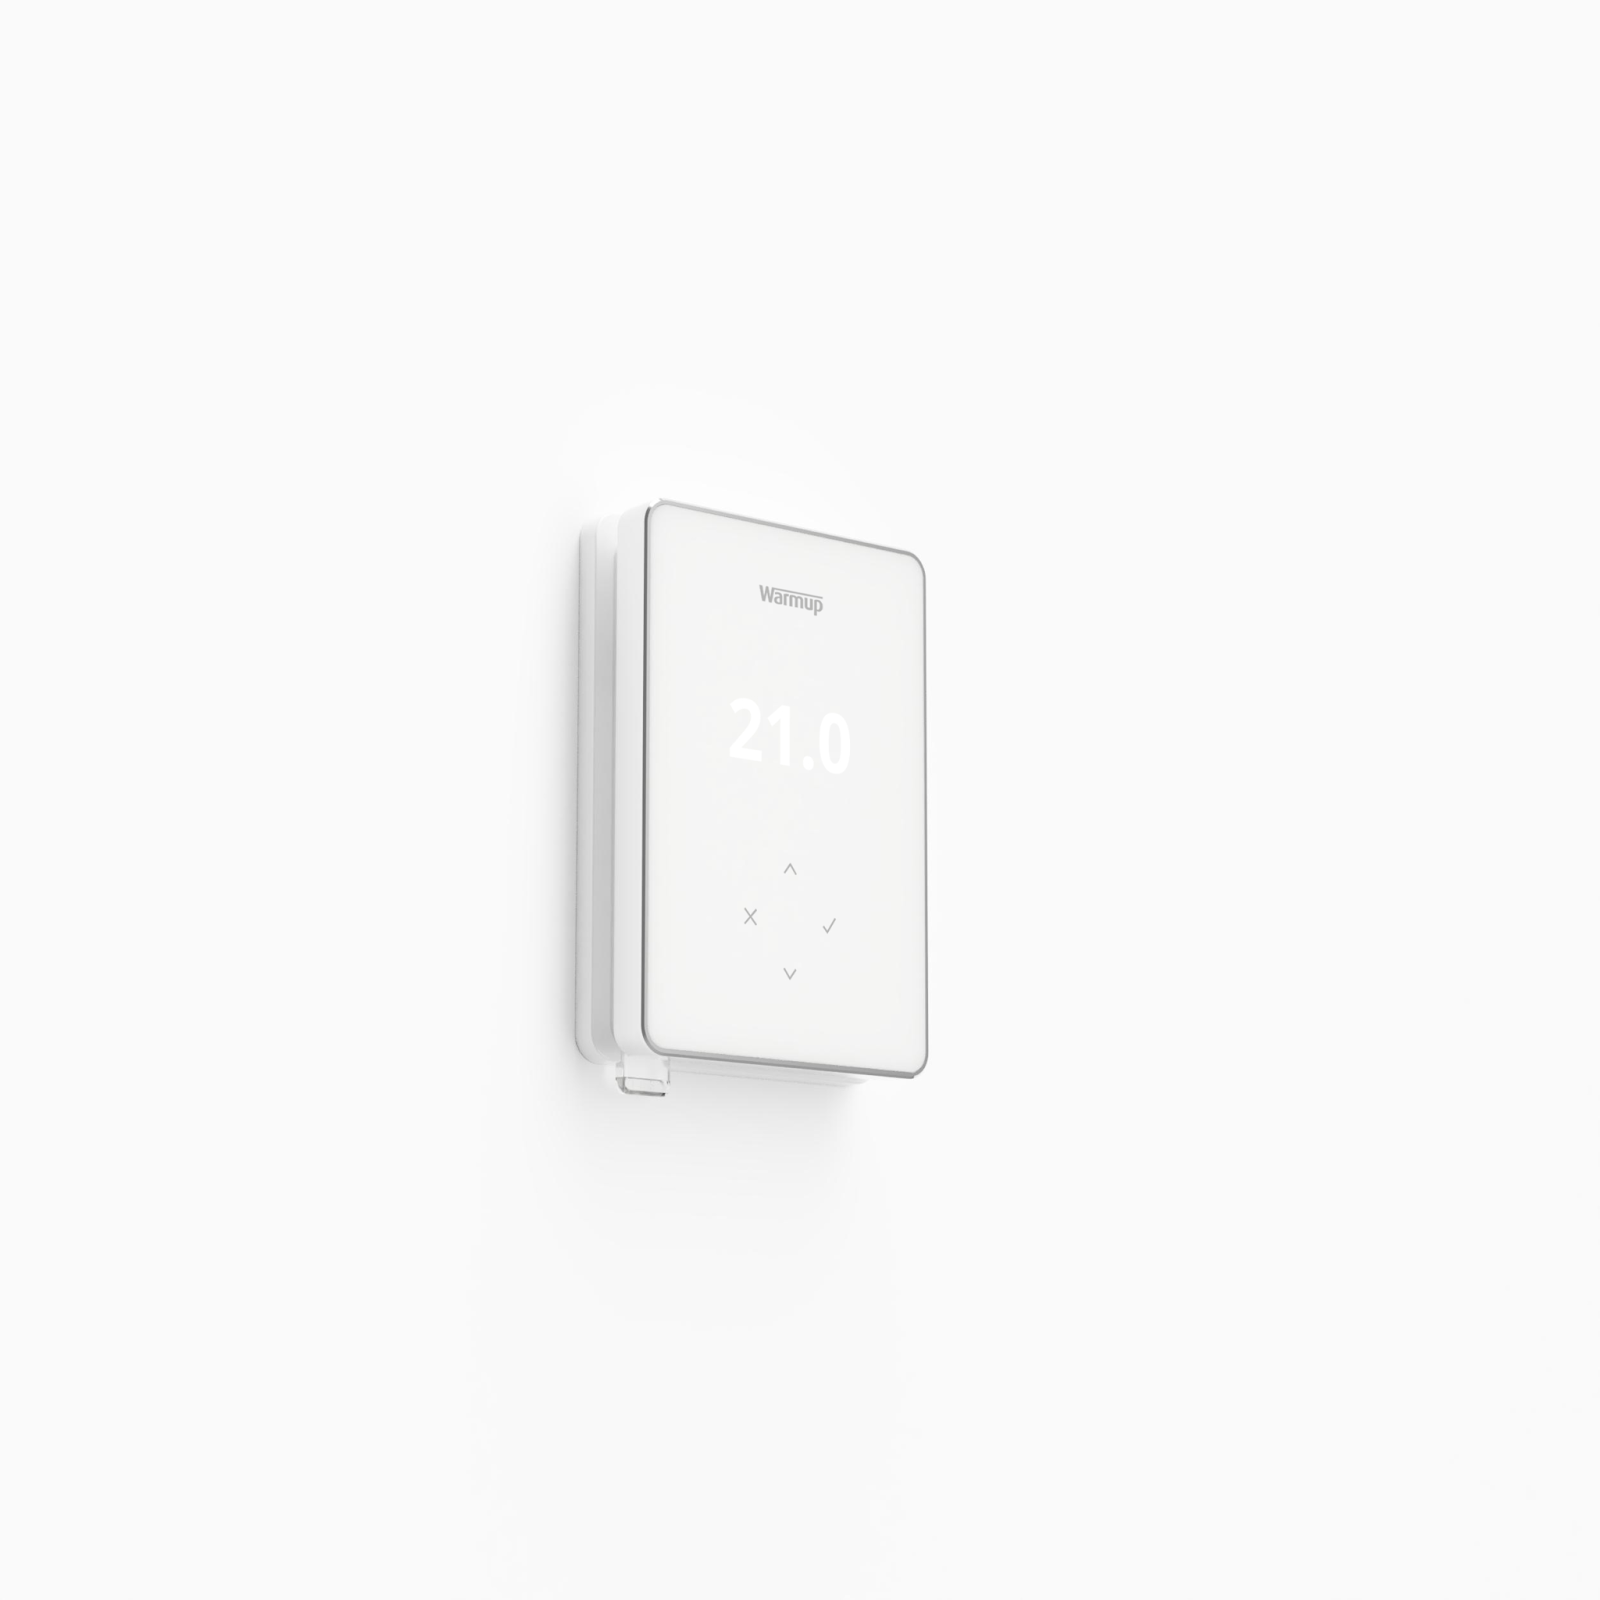 The Terra WiFi Thermostat